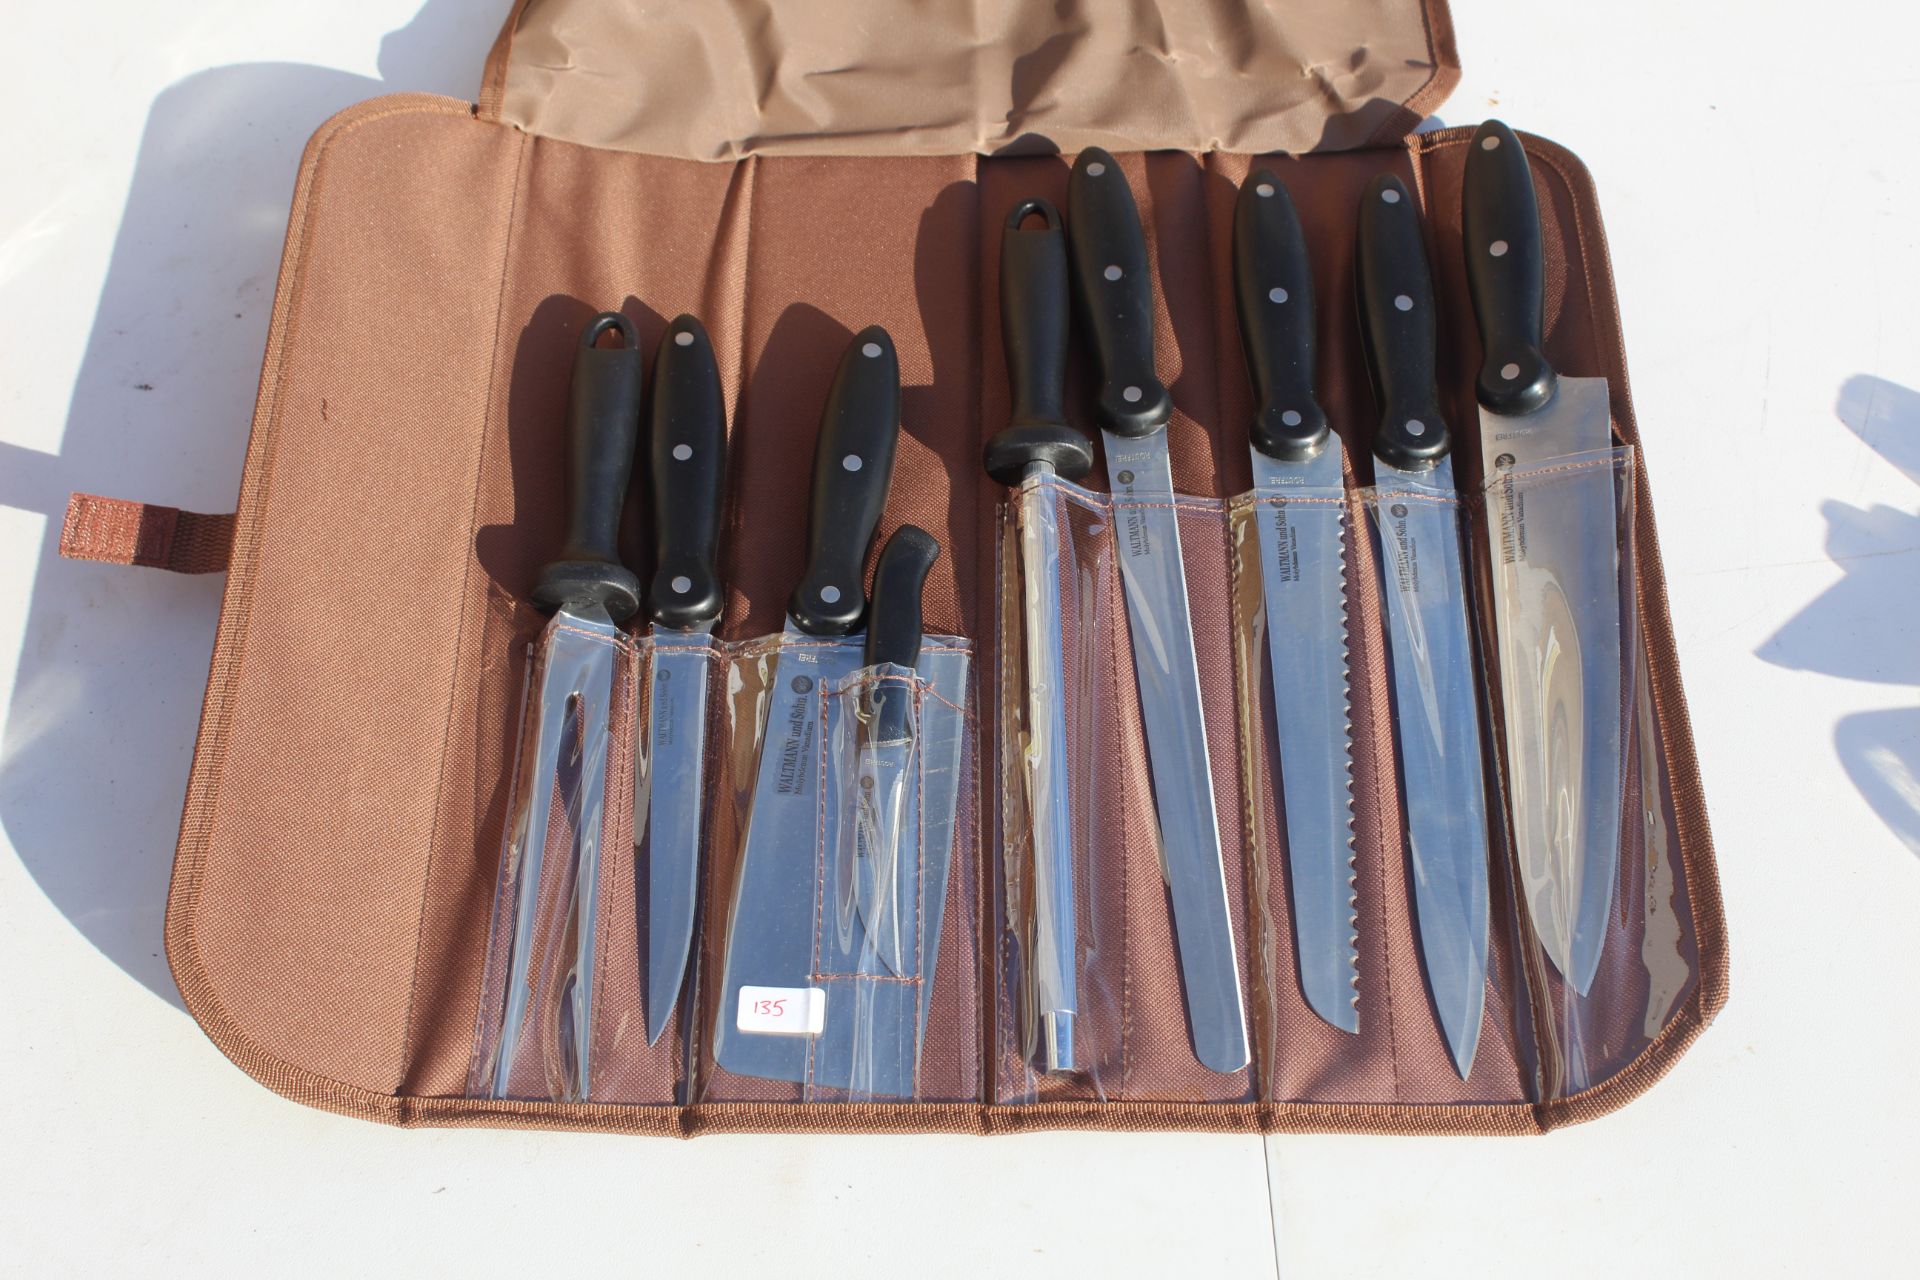 9 pce Knife set in bag. V